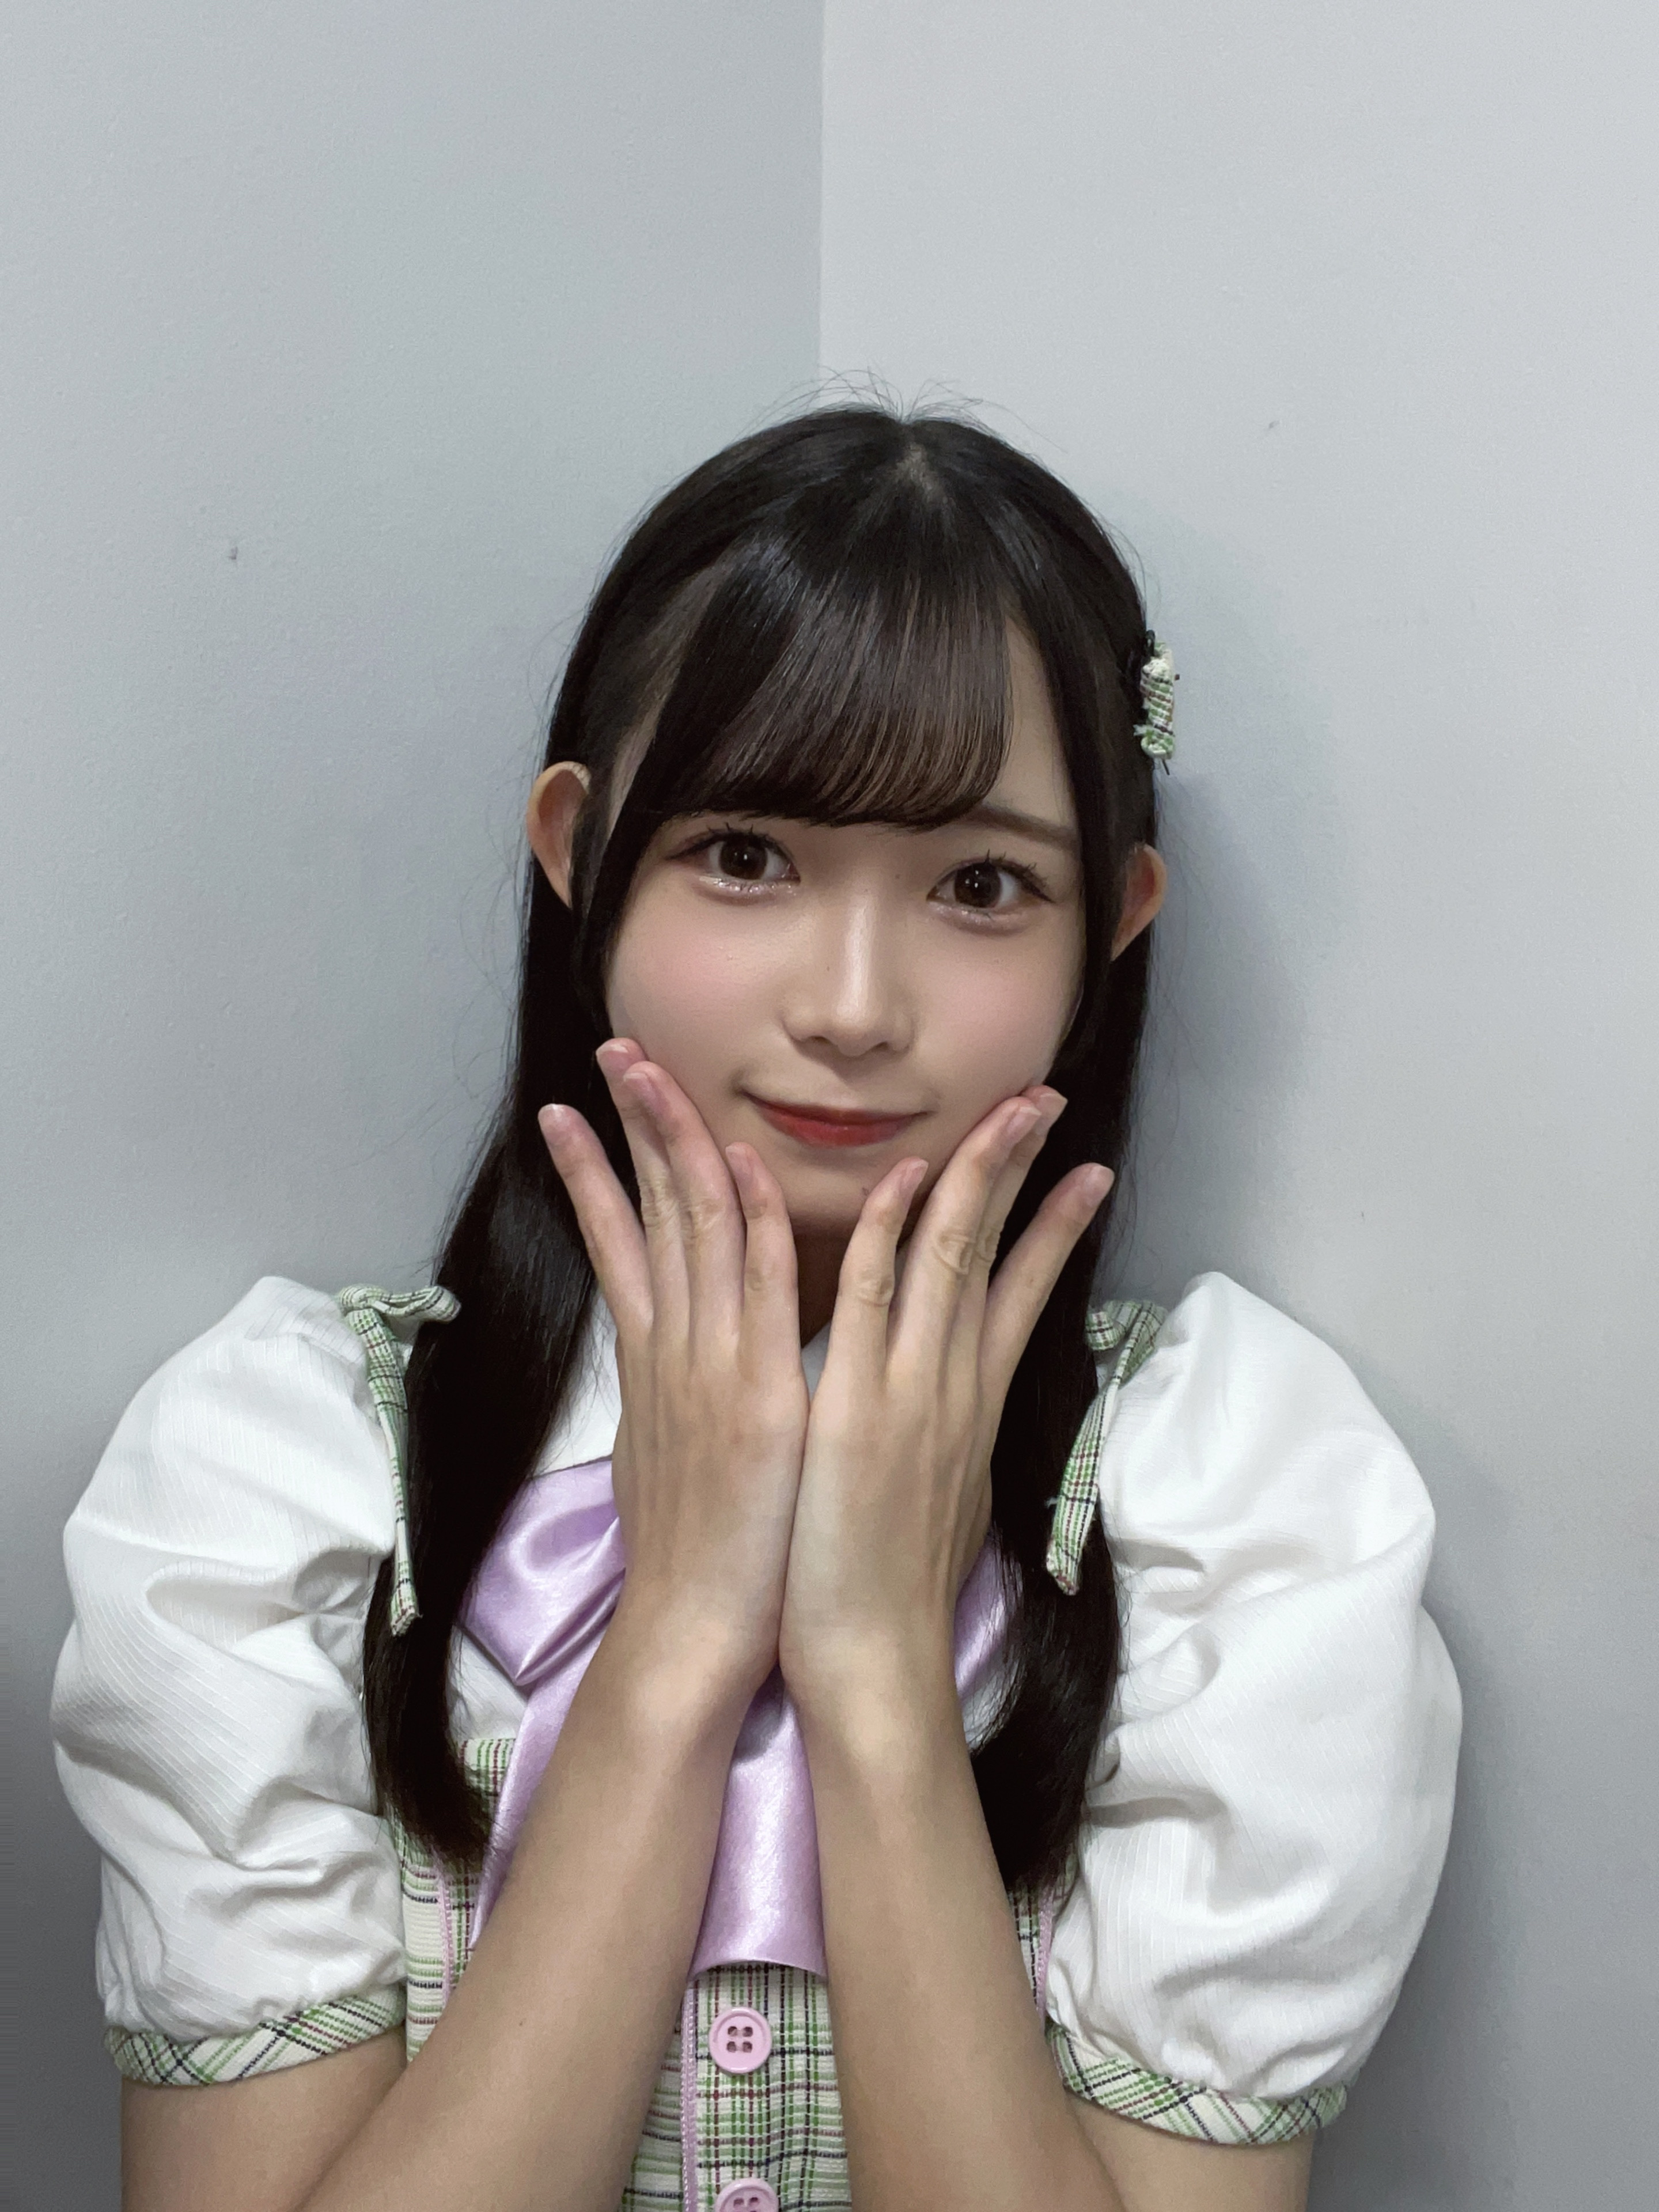 AKB48 Community Posts - AKB48 17期研究生 太田有紀です🐶🎀 Weverse